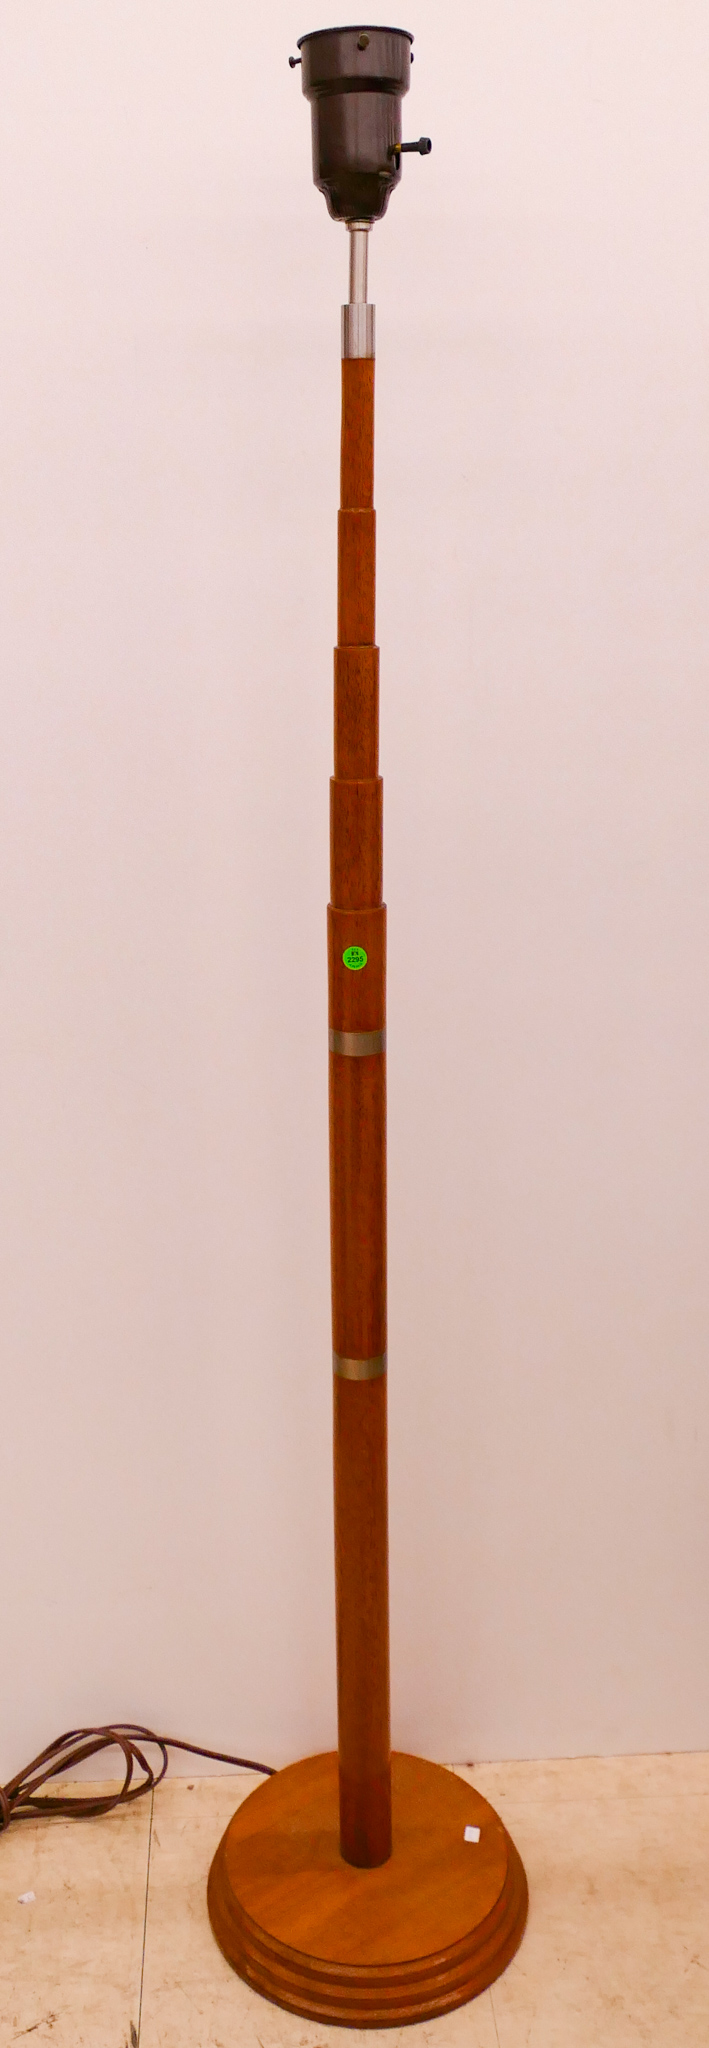 Midcentury Wood Floor Lamp 62  2d61c6